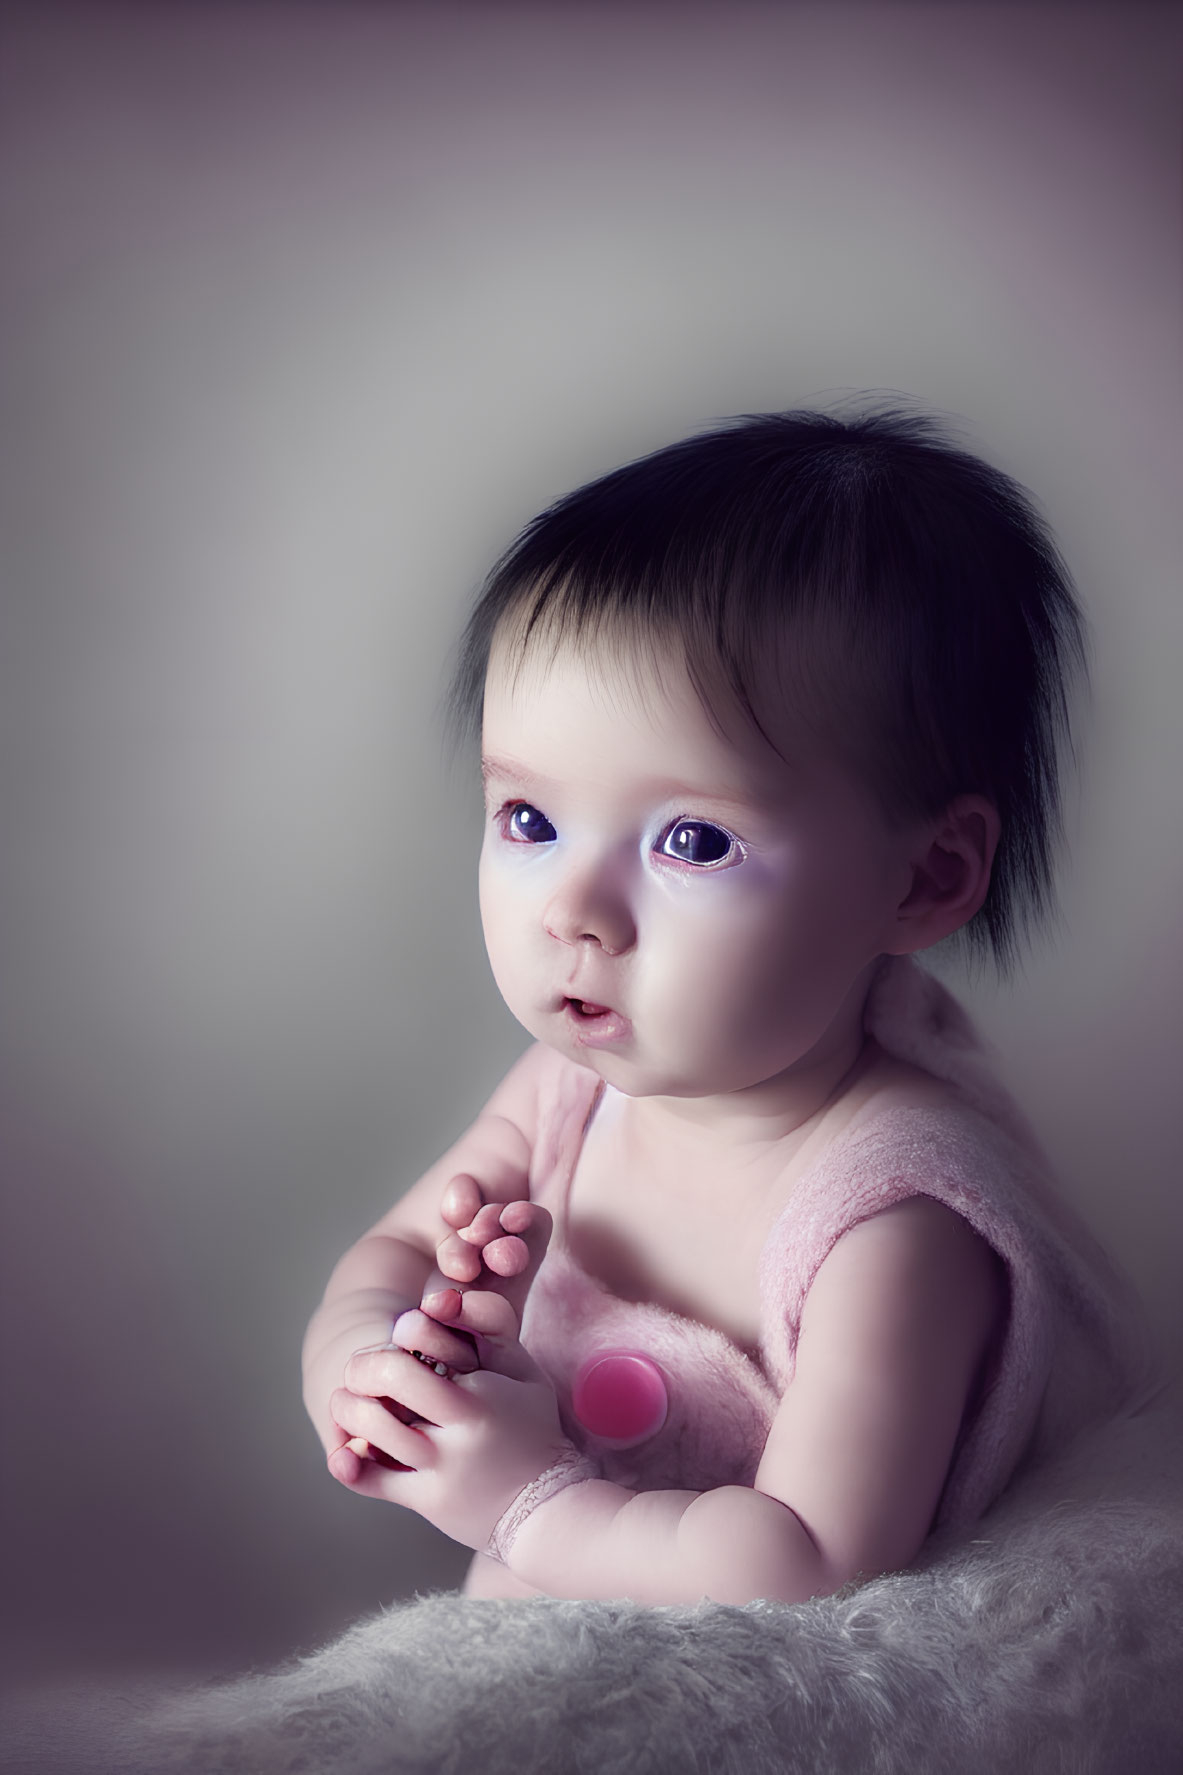 Dark-Haired Baby in Pink Attire with Big Eyes